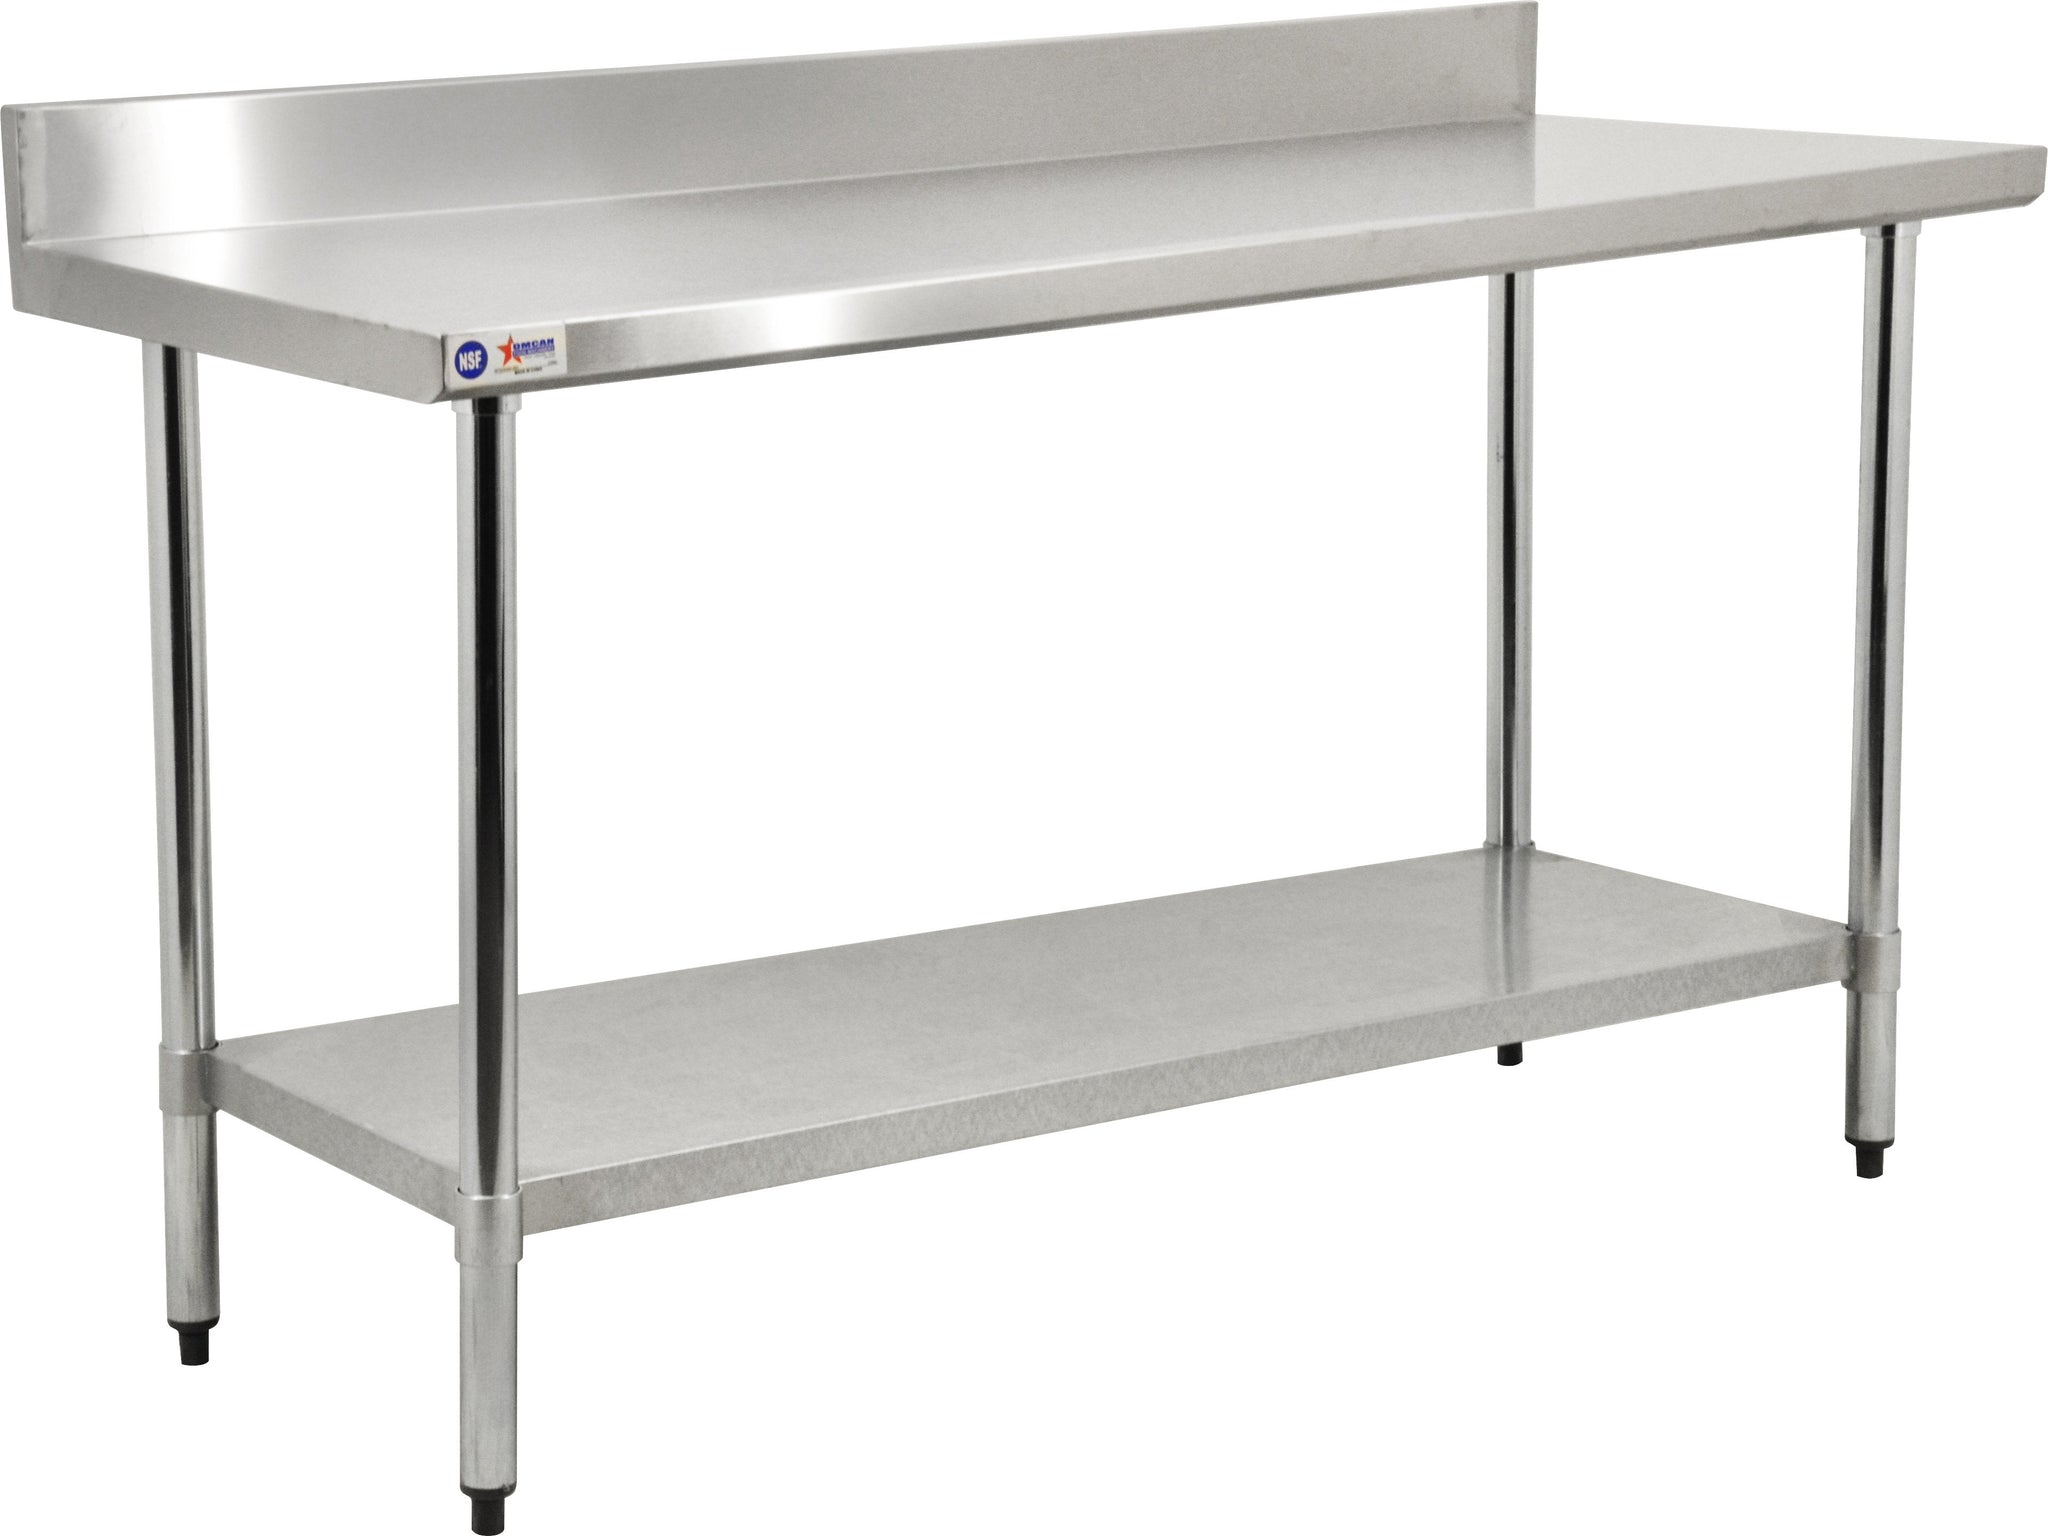 Omcan - 24” x 30” Elite Stainless Steel Work Table with 4" Backsplash - 23794